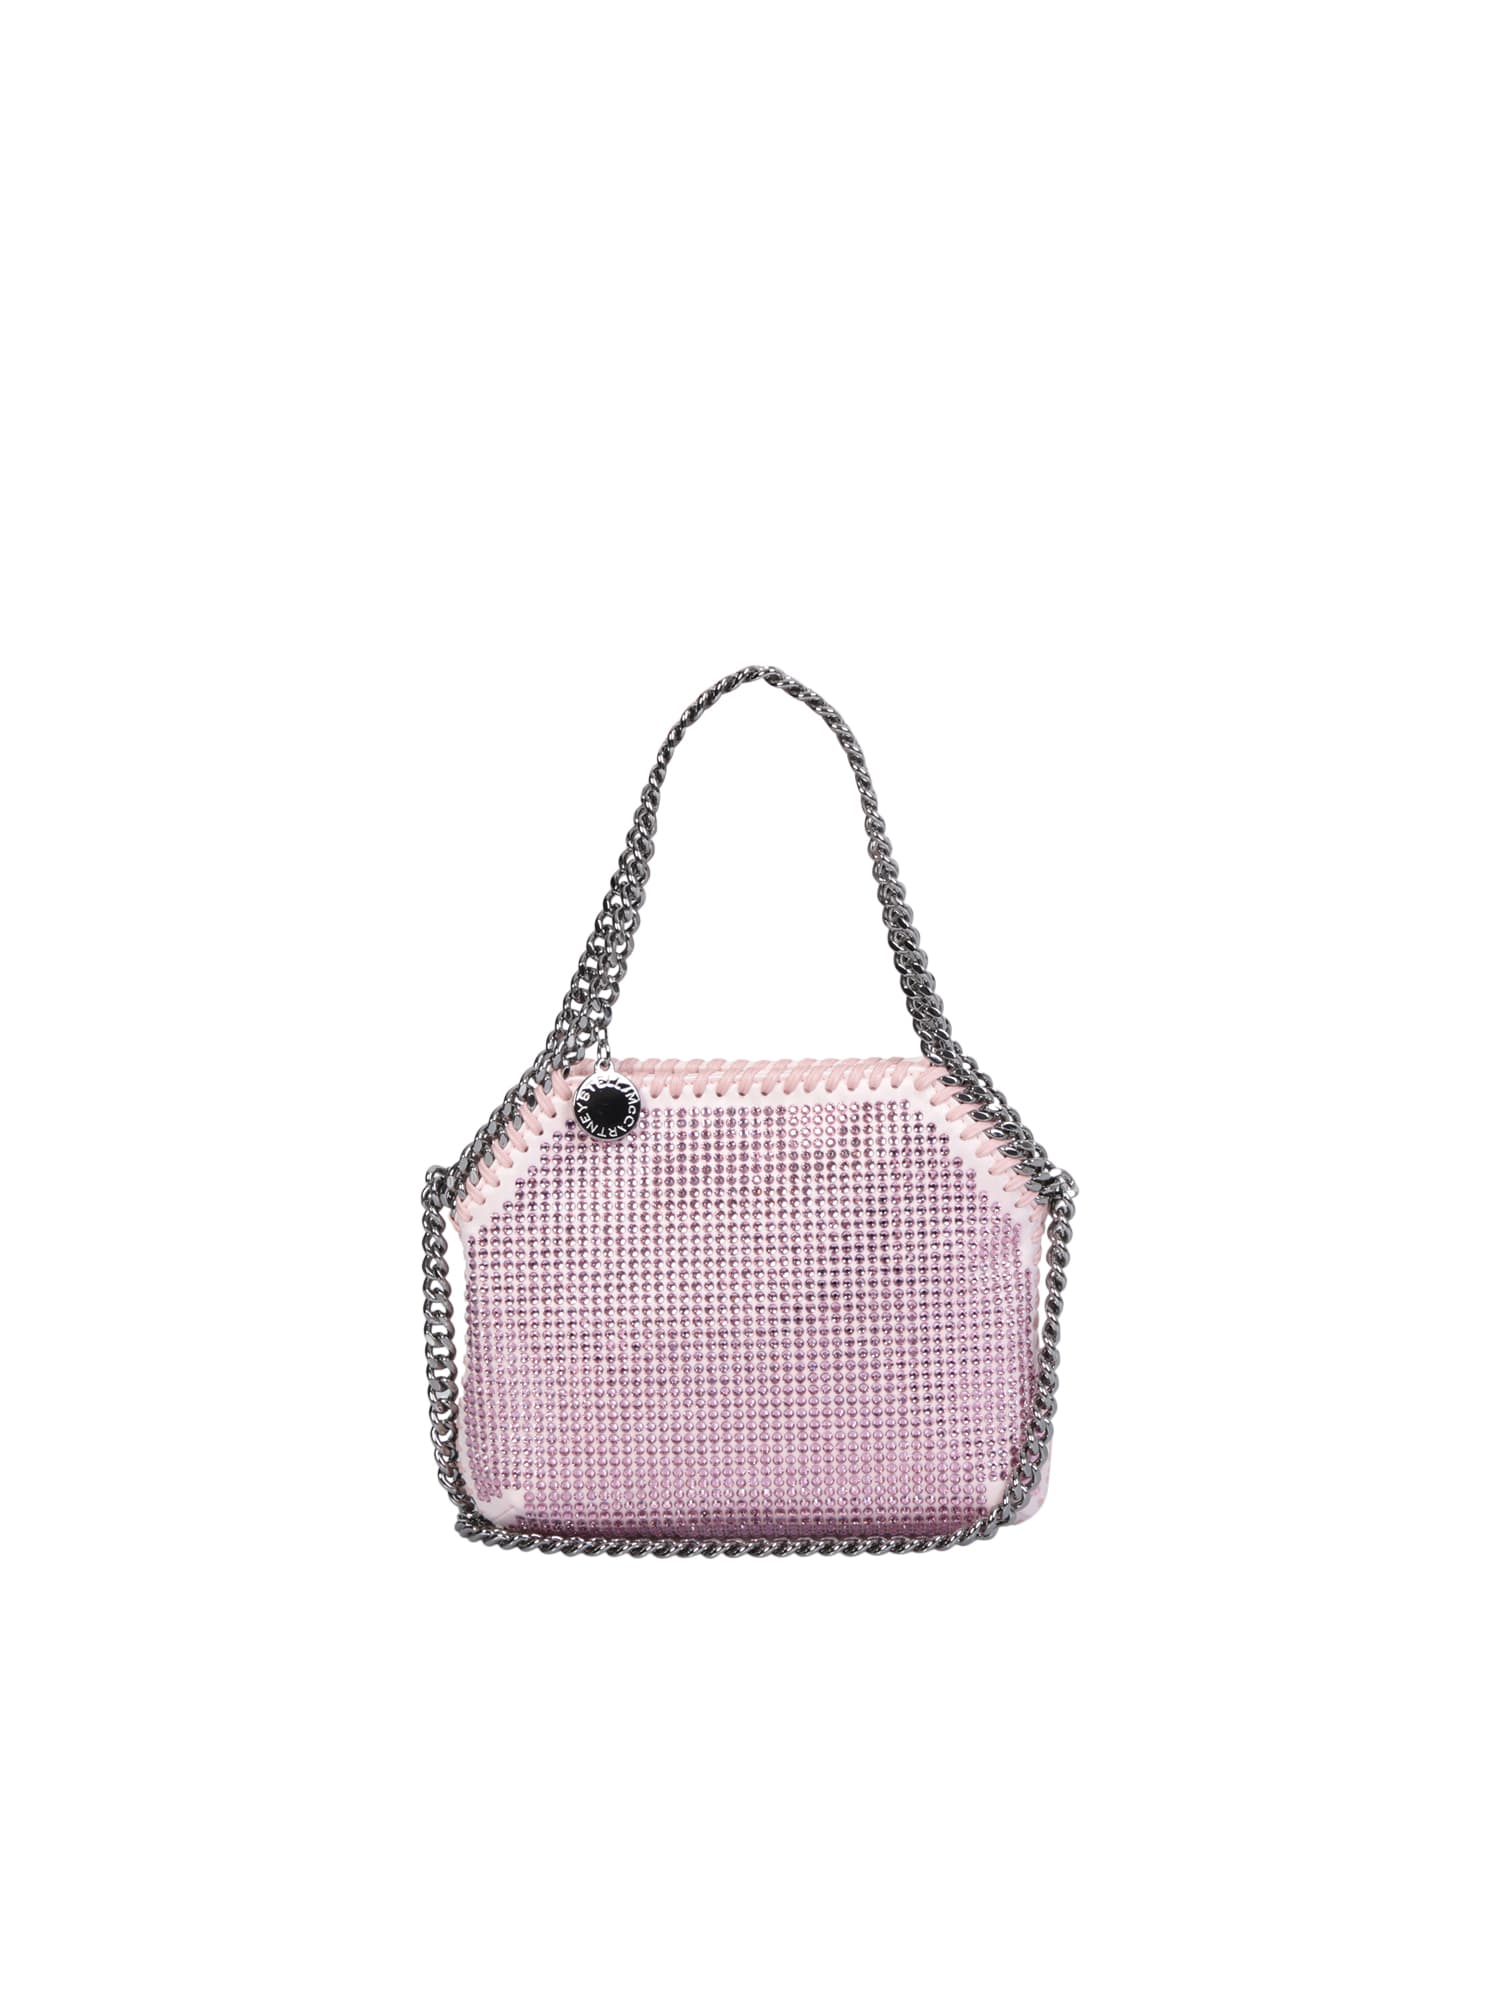 Stella McCartney Tiny Crystal Bag